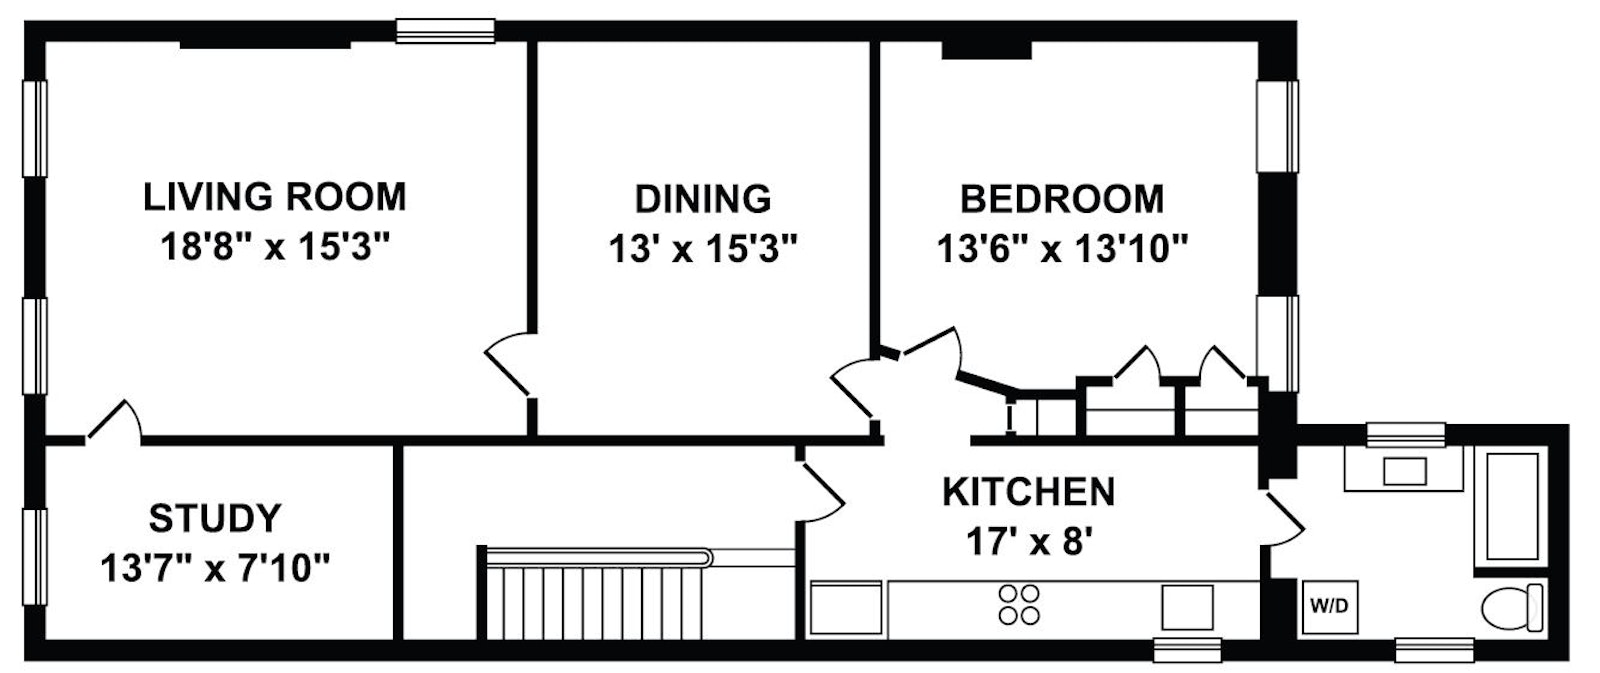 Floorplan for 393 Clinton Street, 3